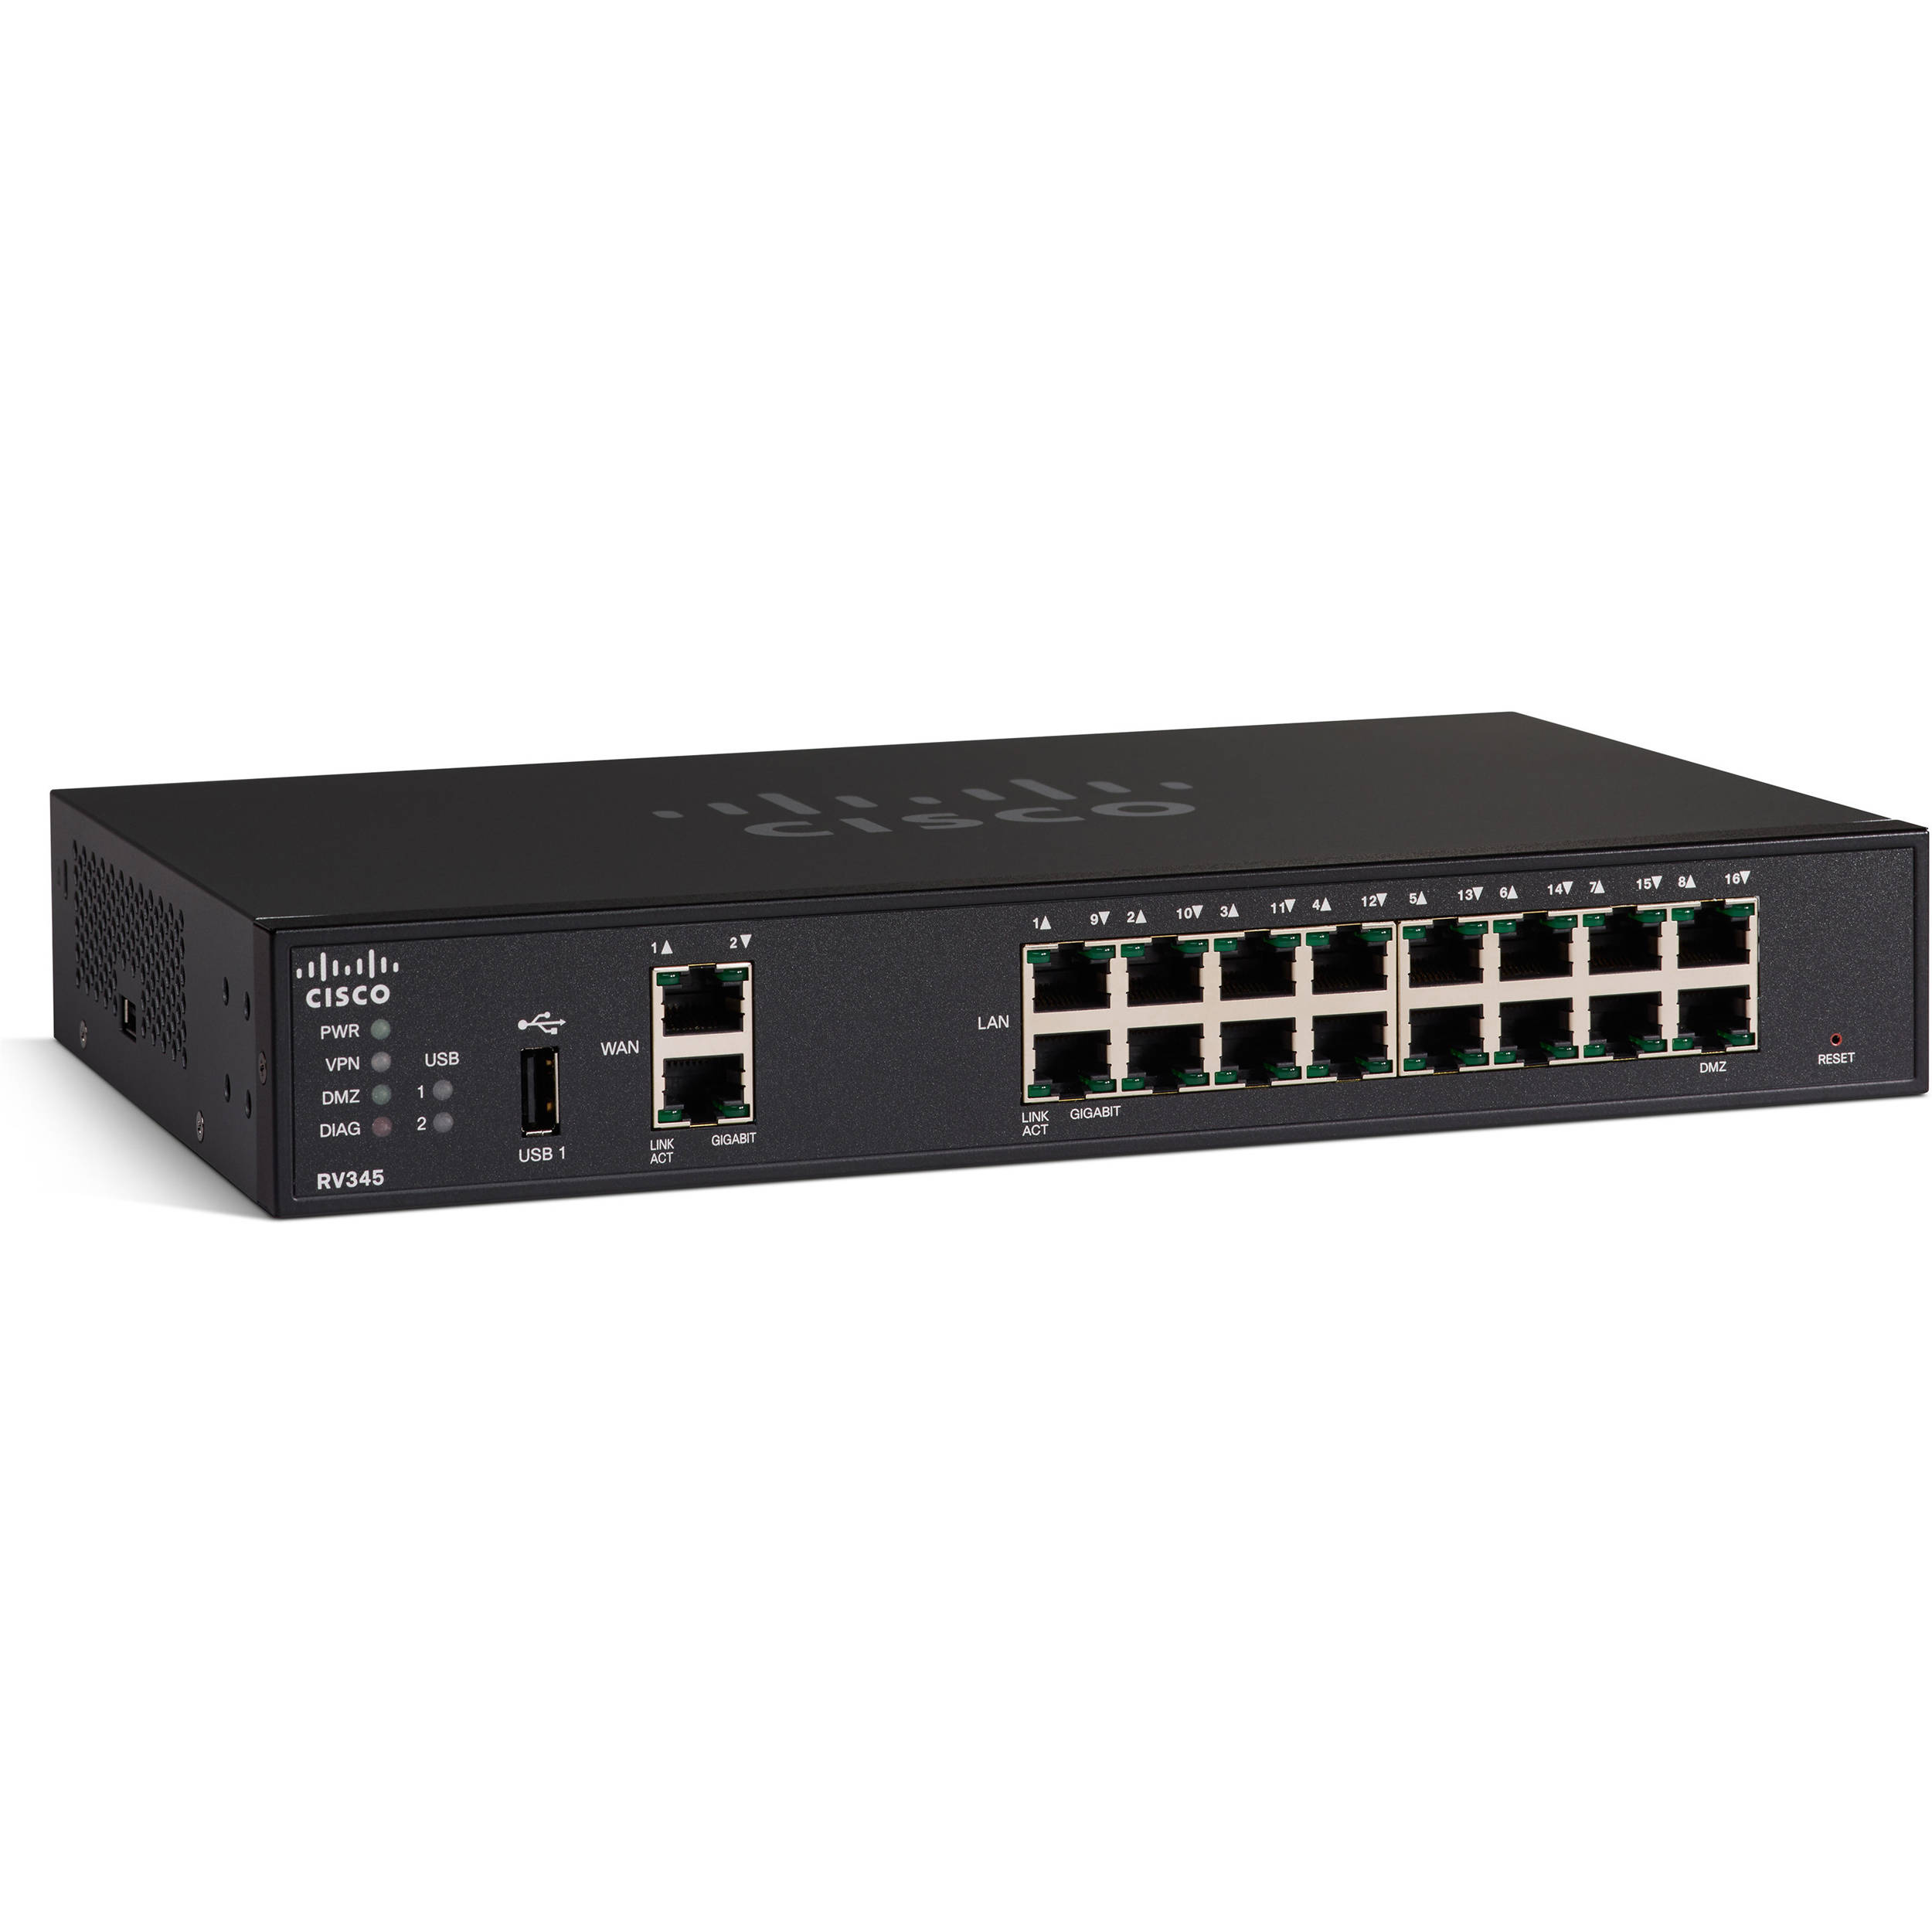 Cisco RV345 16-Port Gigabit Router with Dual WAN